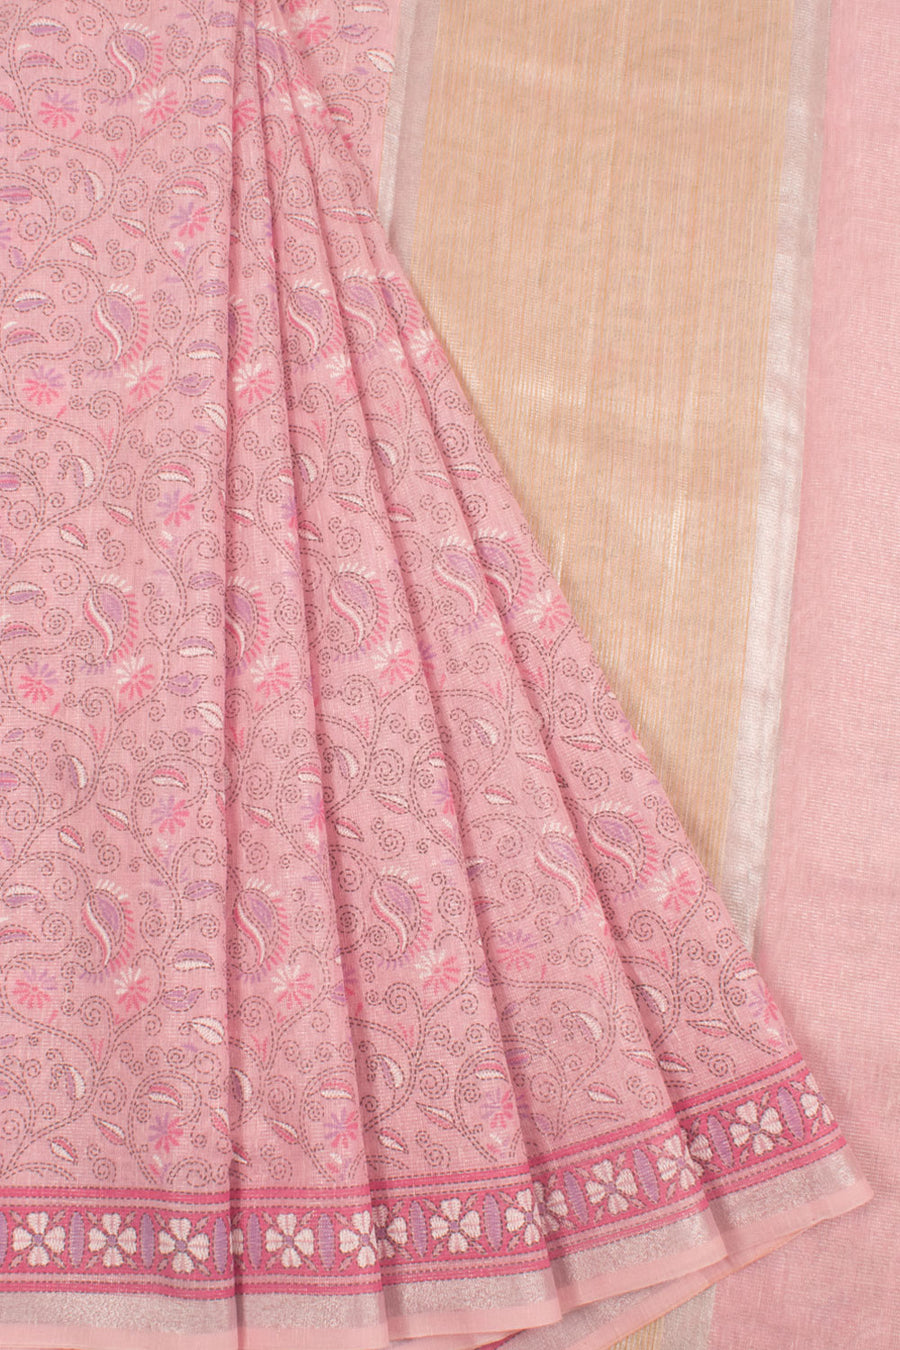 Hand Block Printed Silk Cotton Saree with Floral Motifs, Zari Stripes